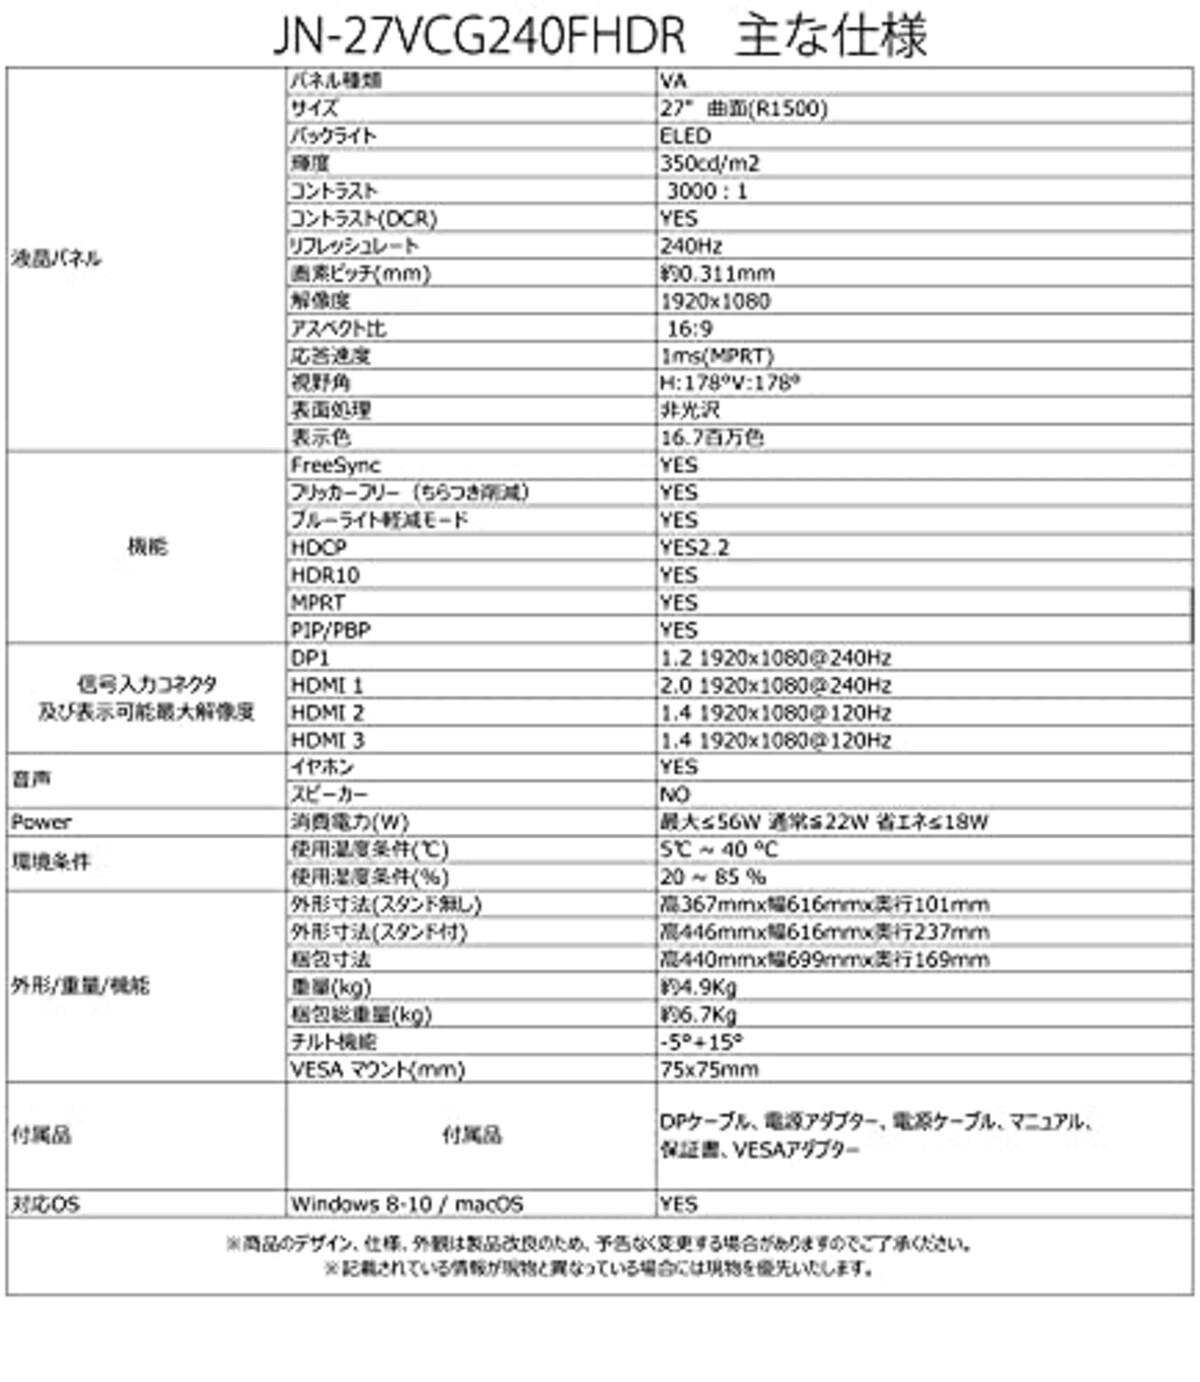  JAPANNEXT 27インチ 曲面 Full HD(1920 x 1080) 240Hz 液晶モニター JN-27VCG240FHDR画像9 